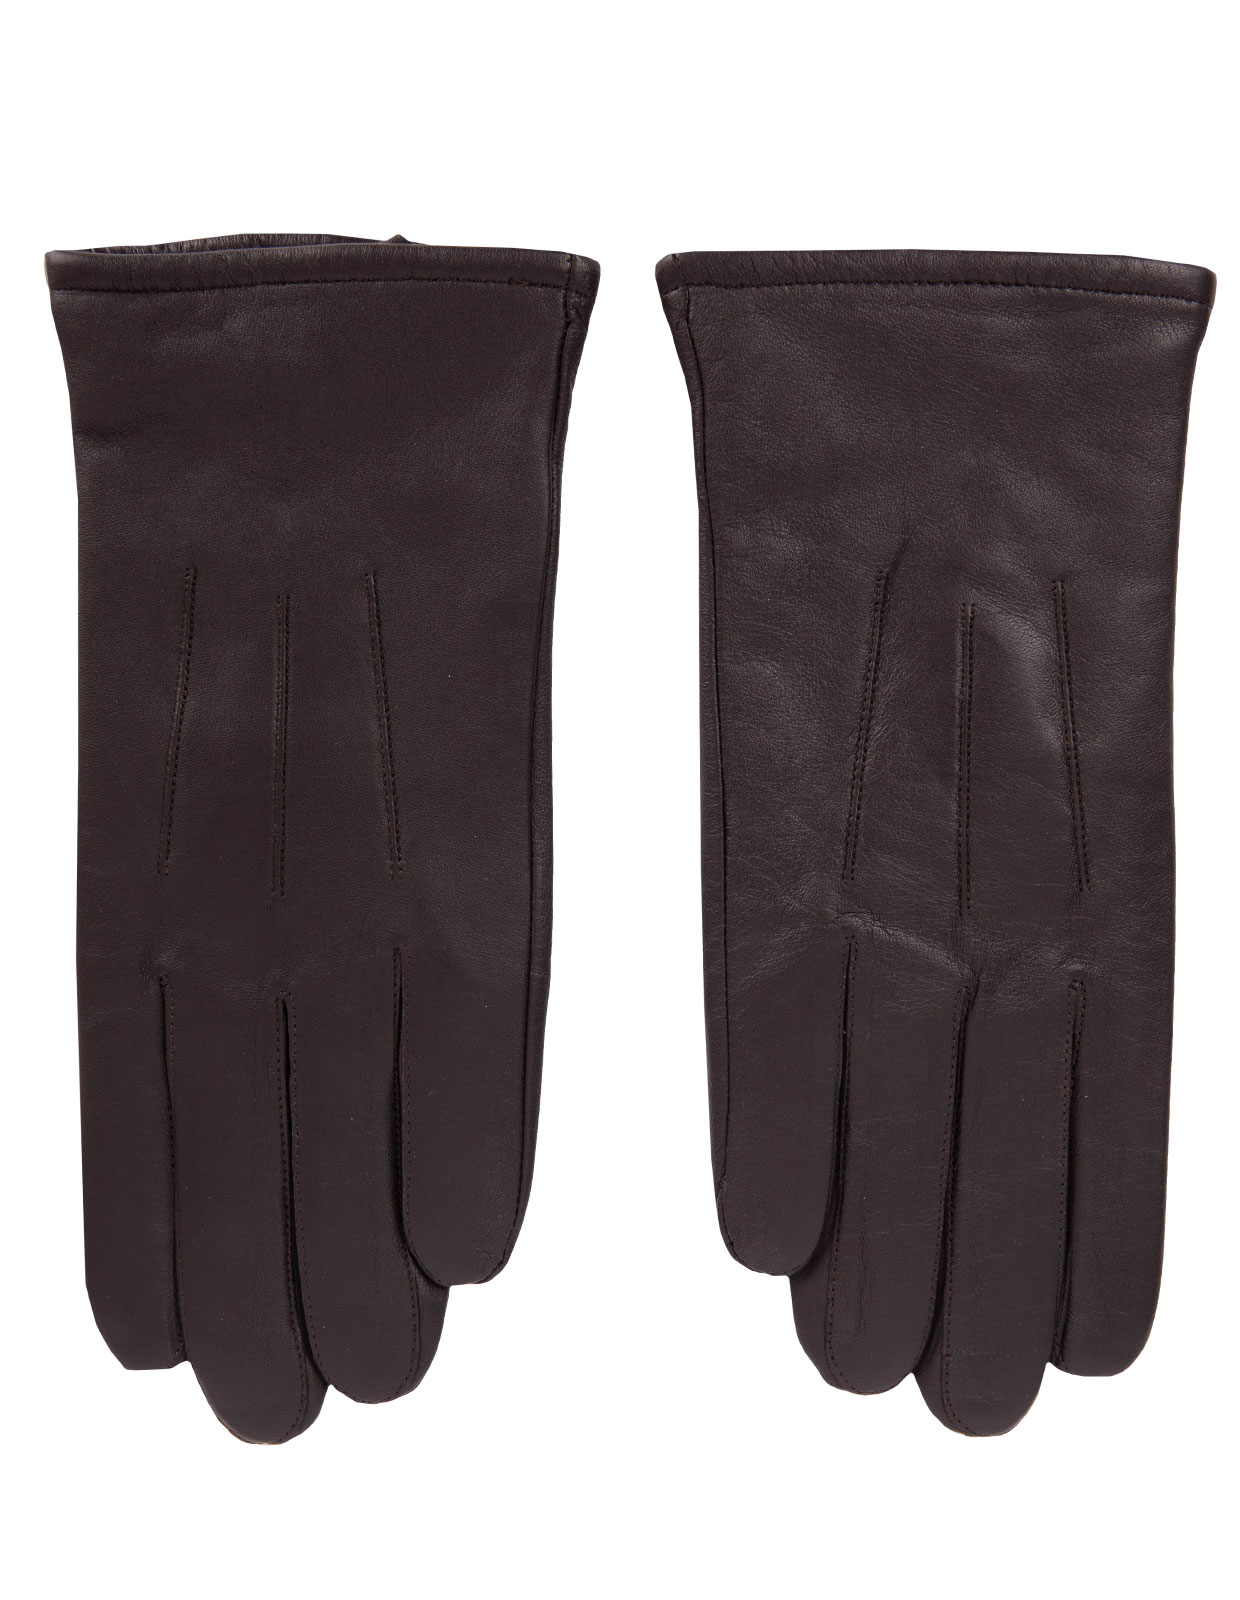 Classic Lambskin Gloves Chocolate Stl 9.5